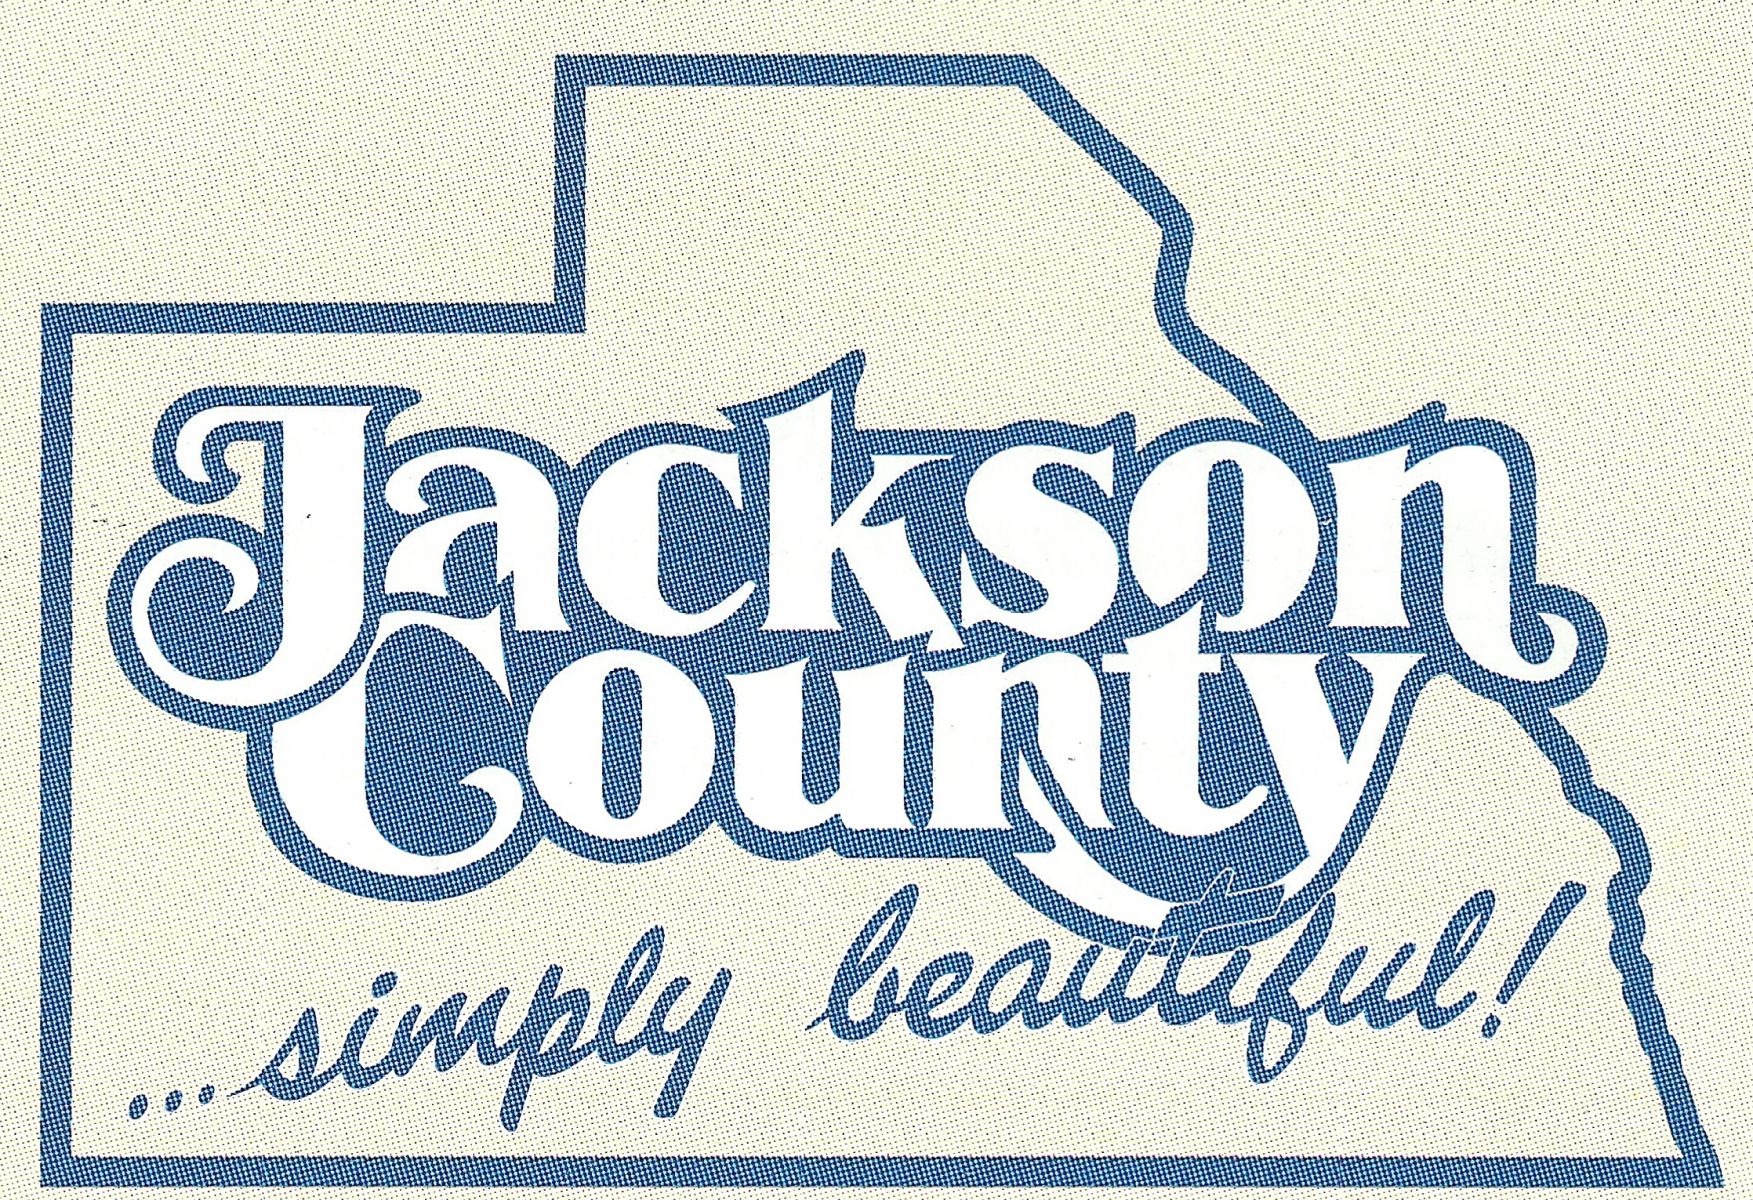 Jackson County's Logo